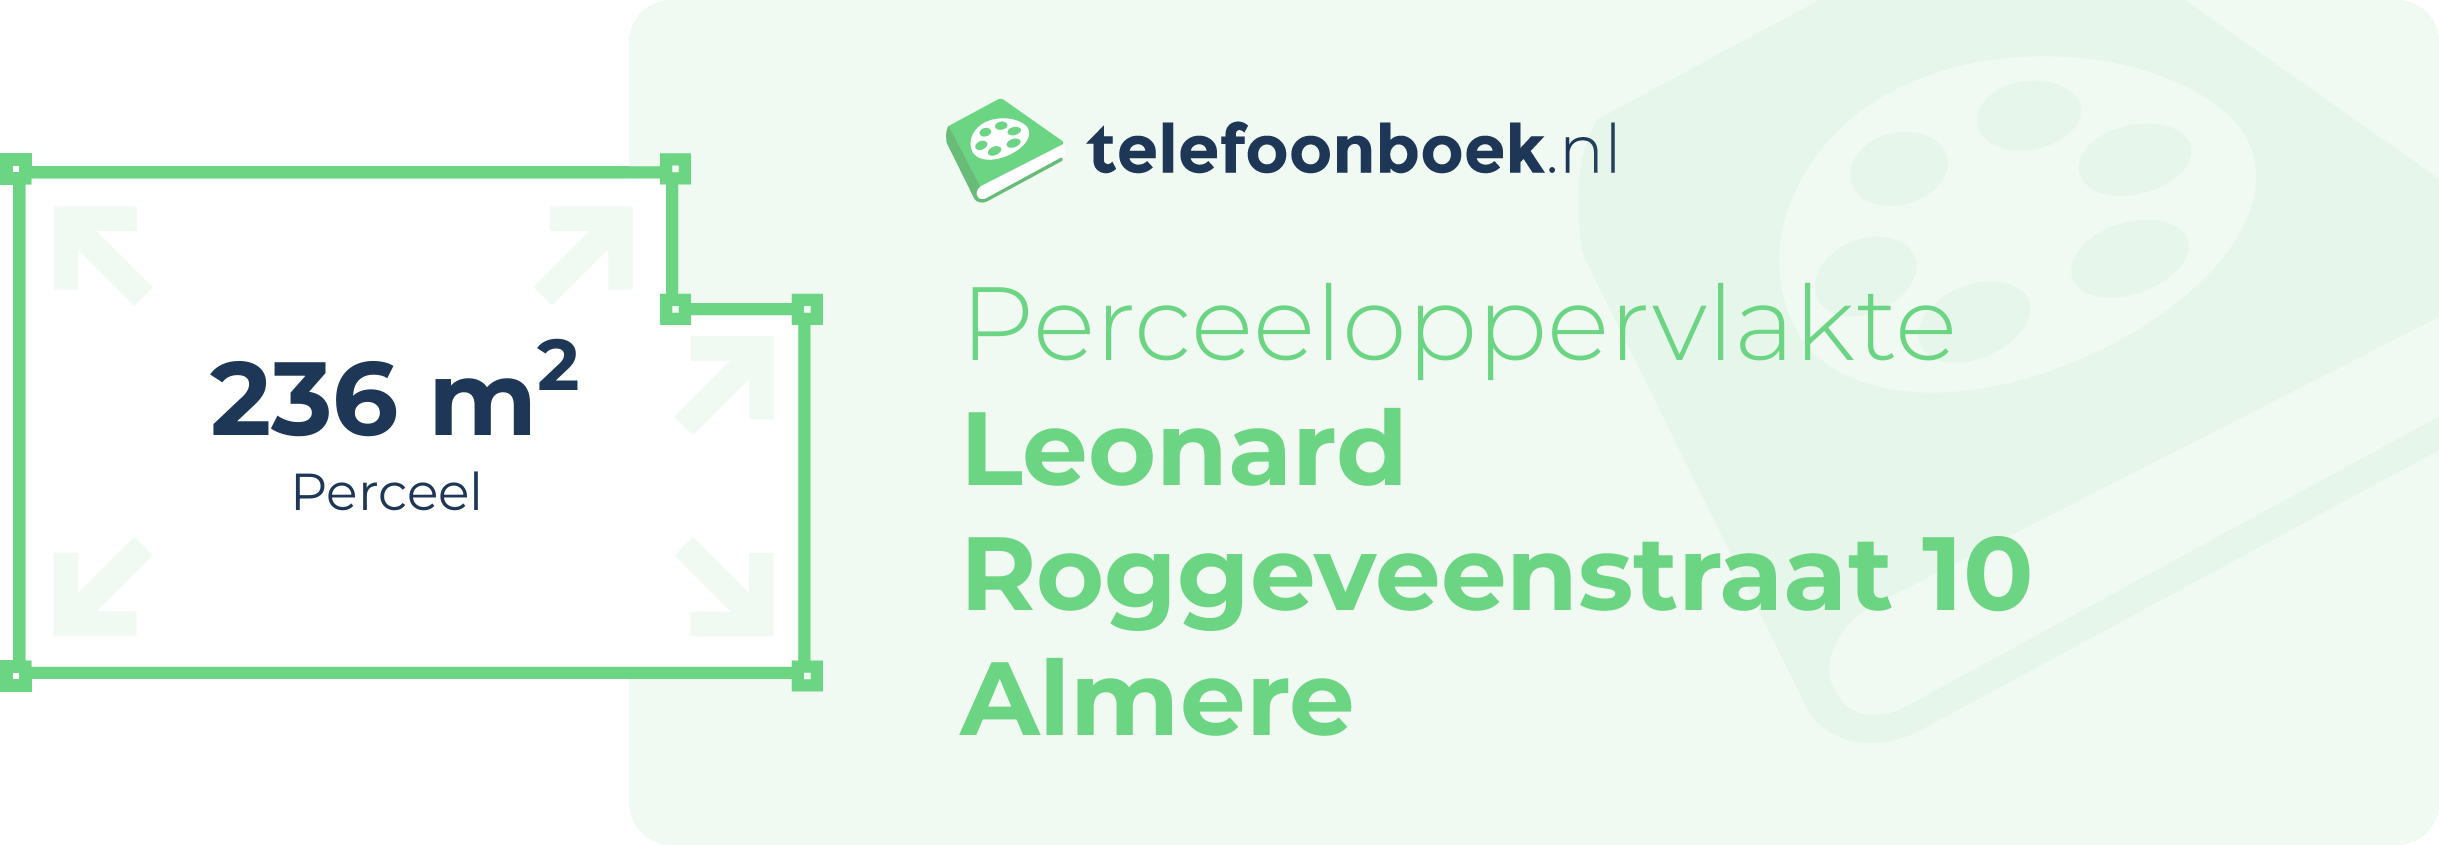 Perceeloppervlakte Leonard Roggeveenstraat 10 Almere